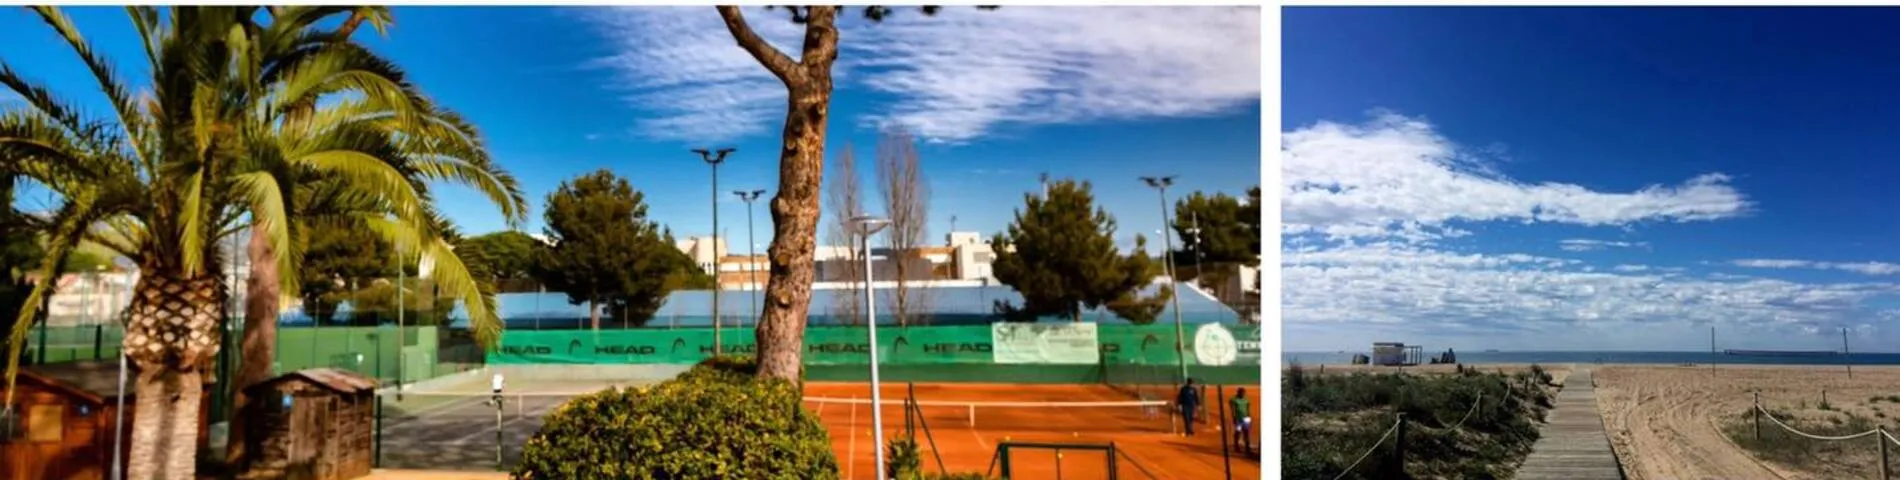 Barcelona Tennis Academy画像1